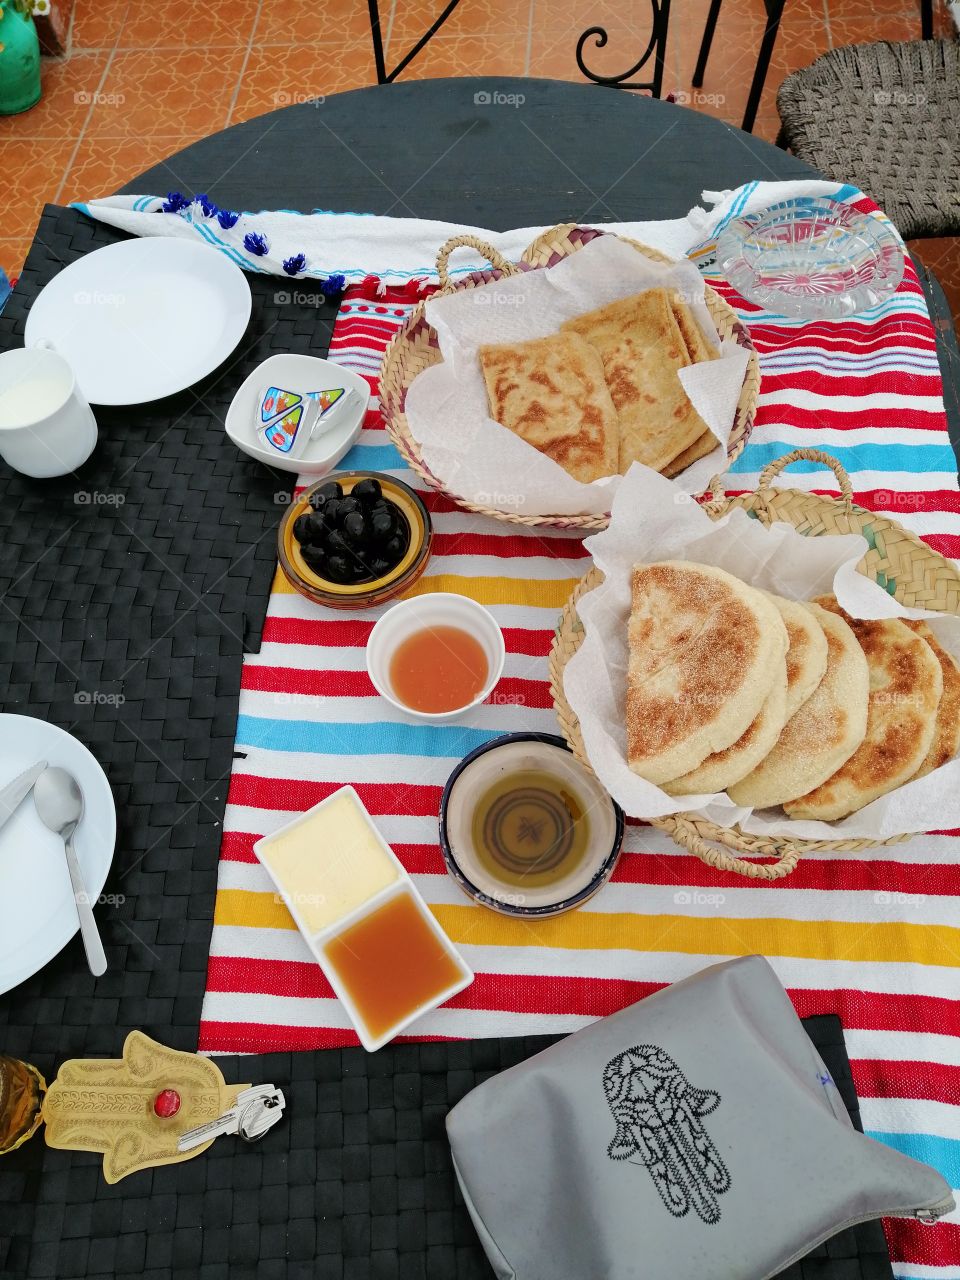 A delicious traditional Morocco breakfast